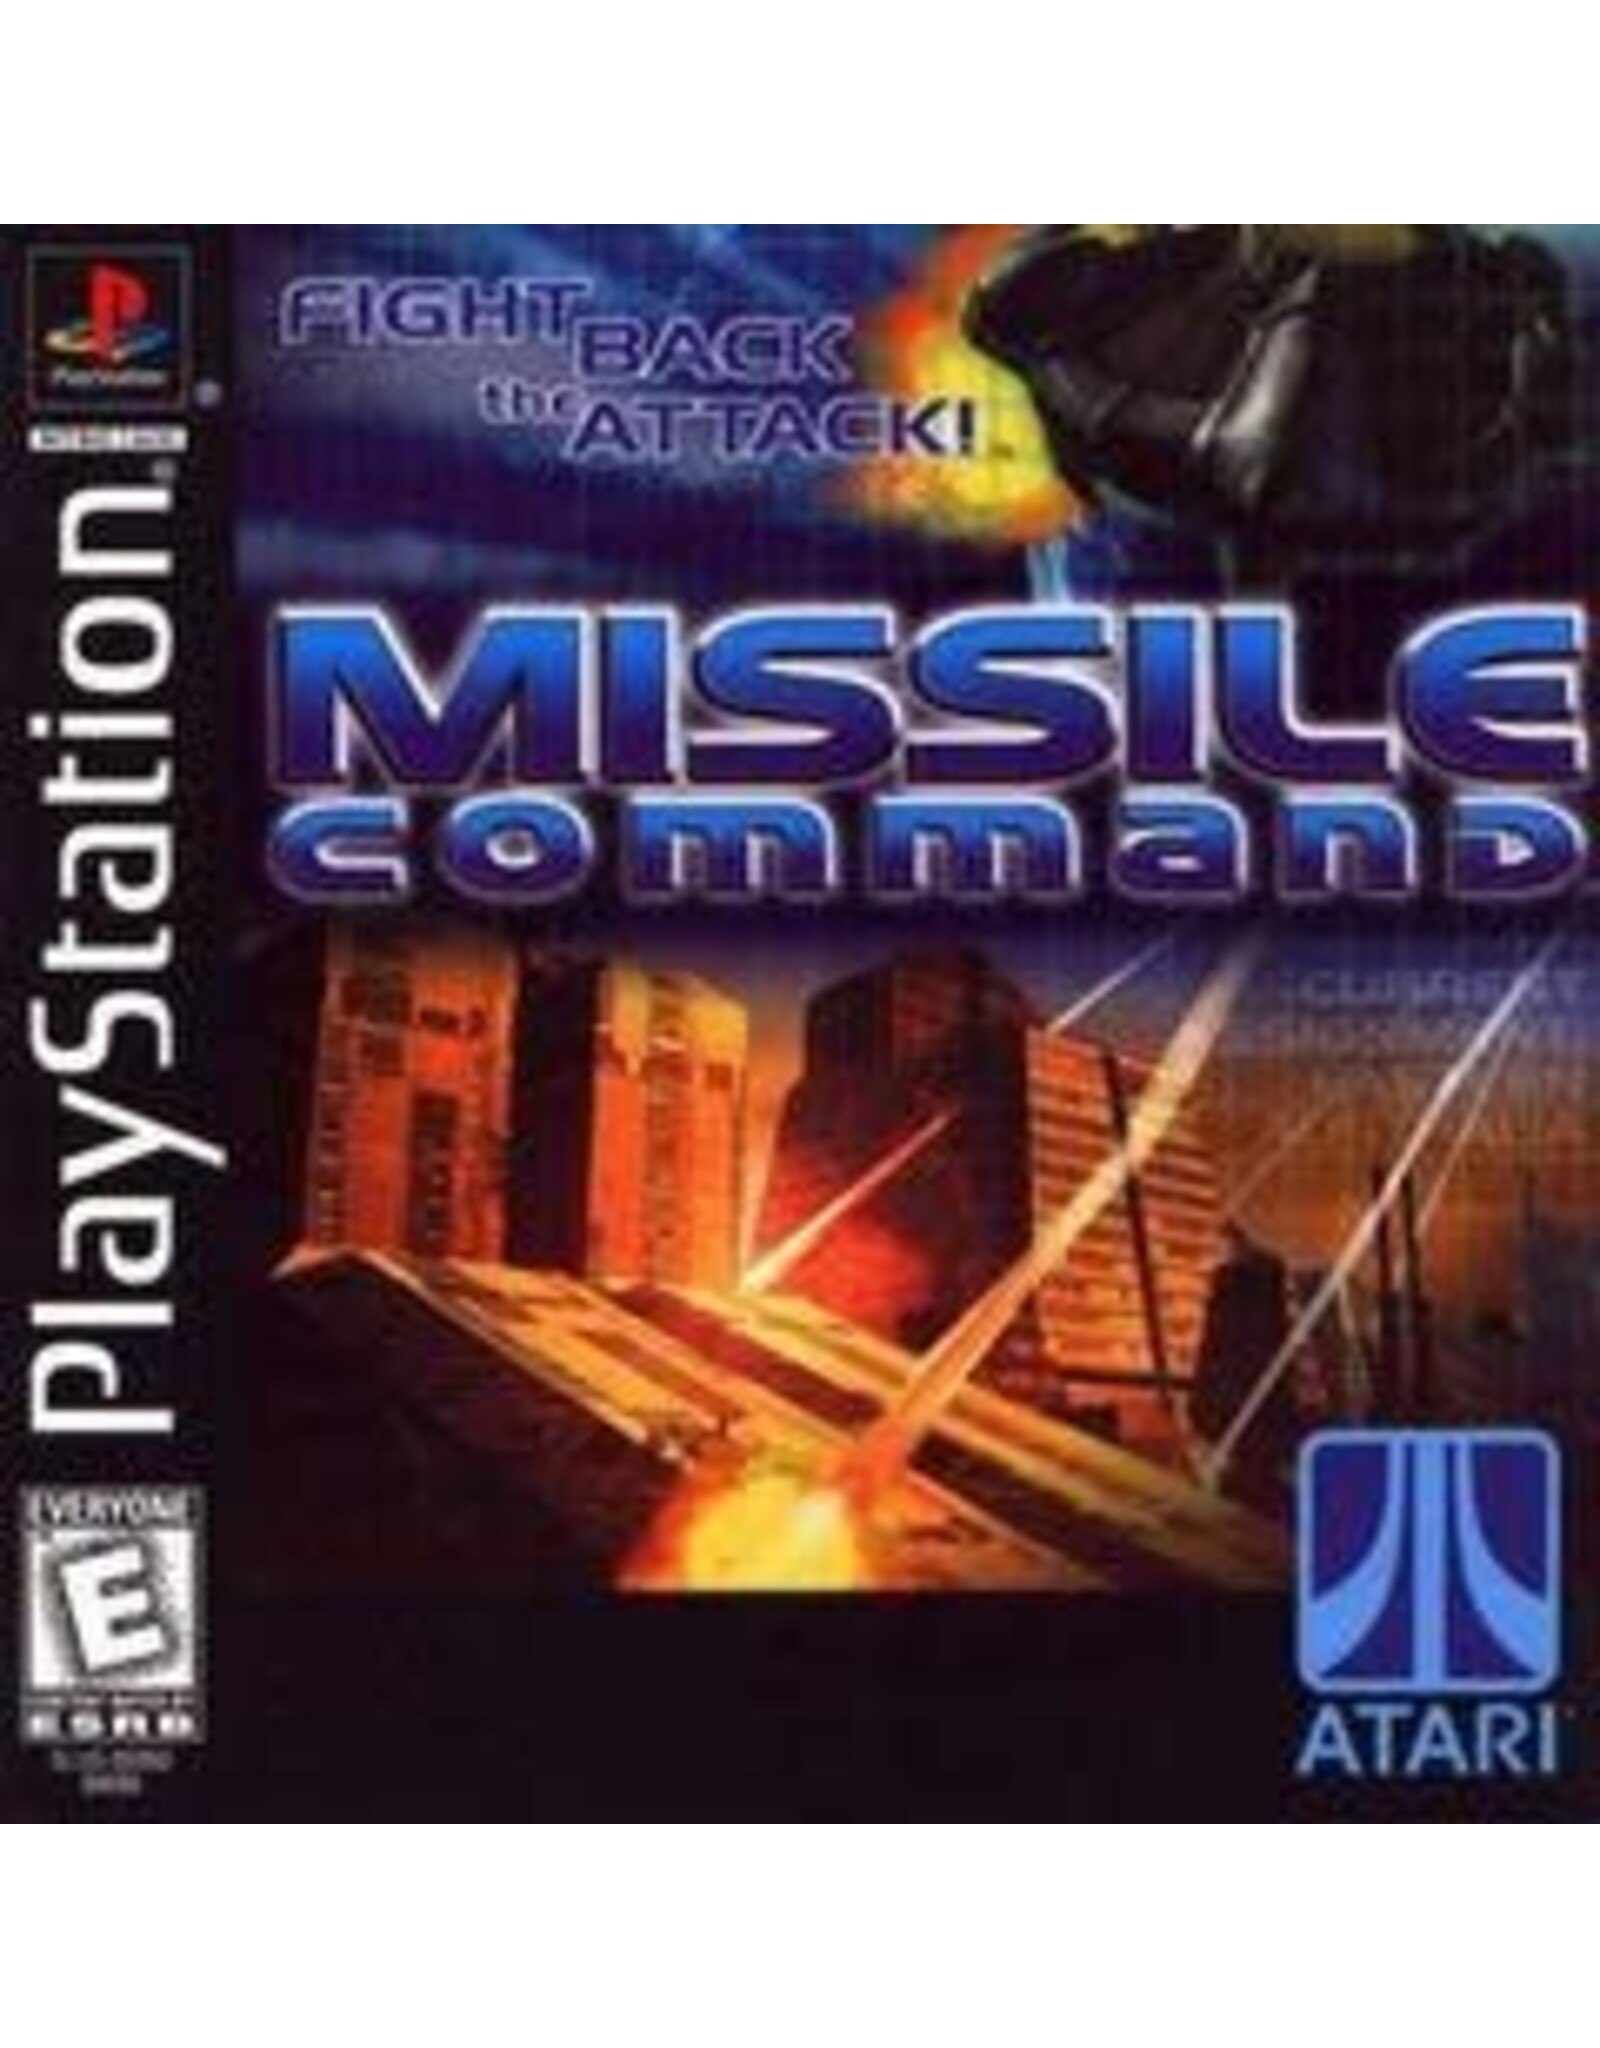 Playstation Missile Command (CiB)